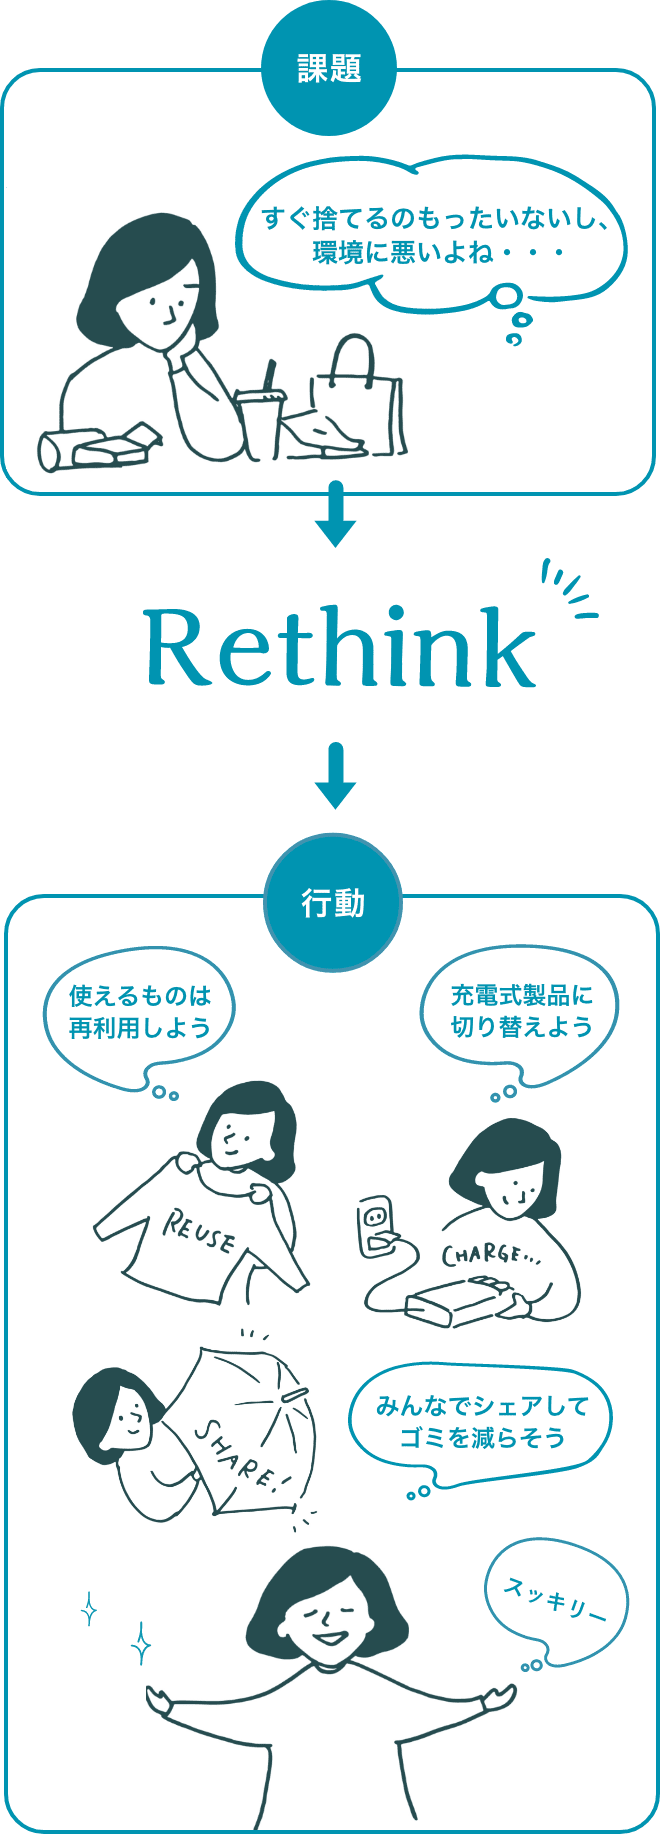 課題→Rthink→行動